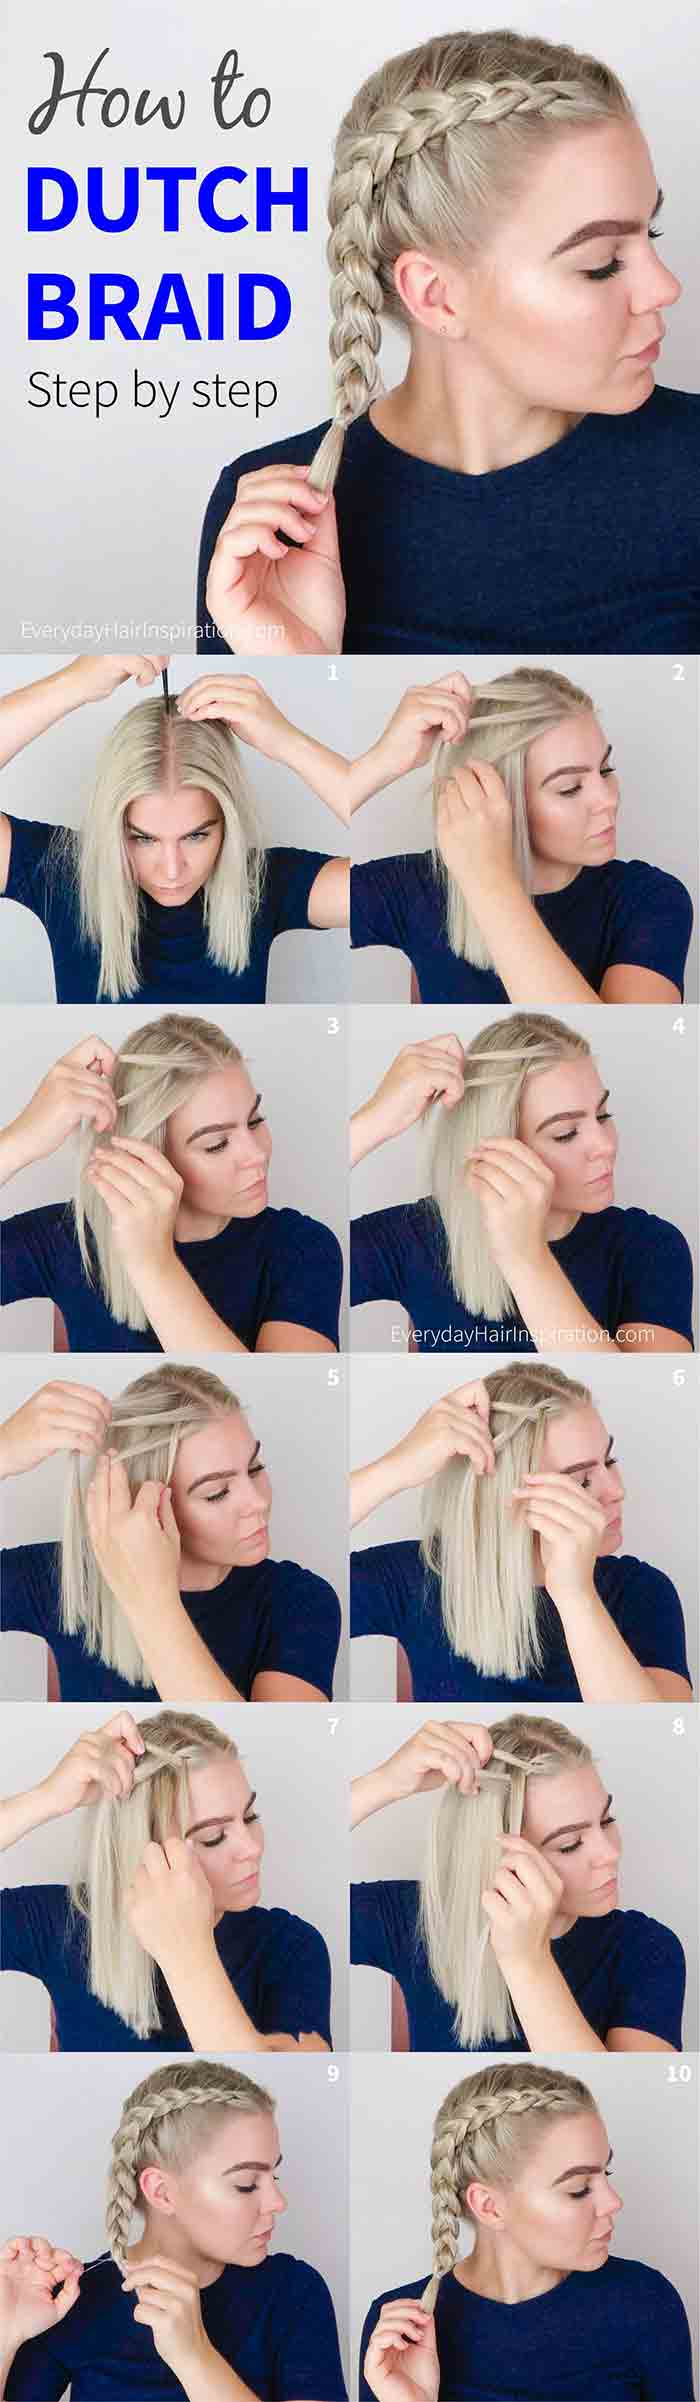 Dutch braid step by step tutorial